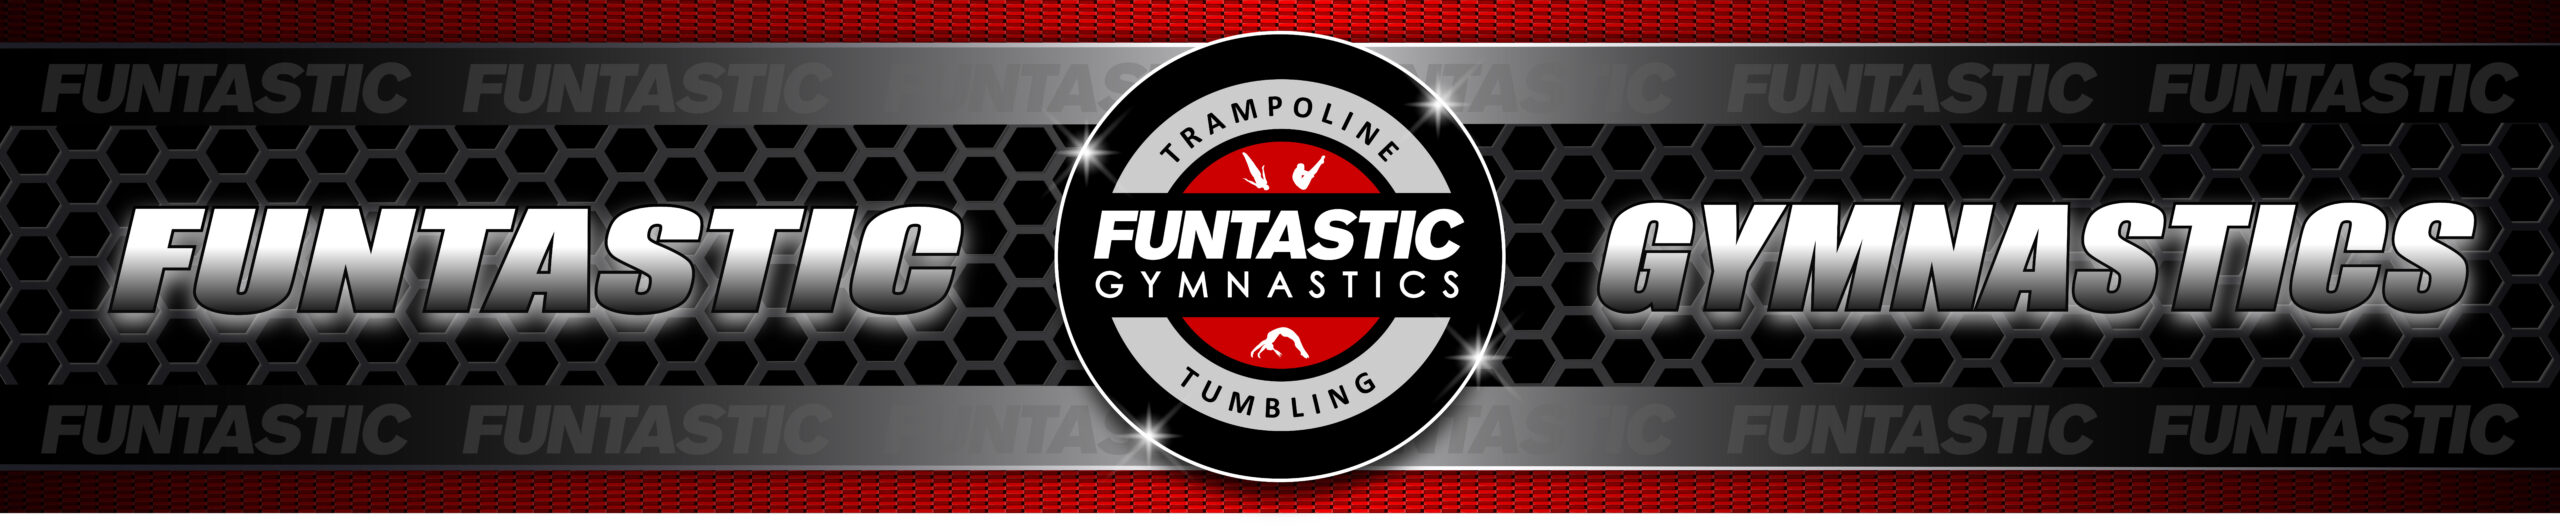 A red and black logo for funtastic gymnastics.